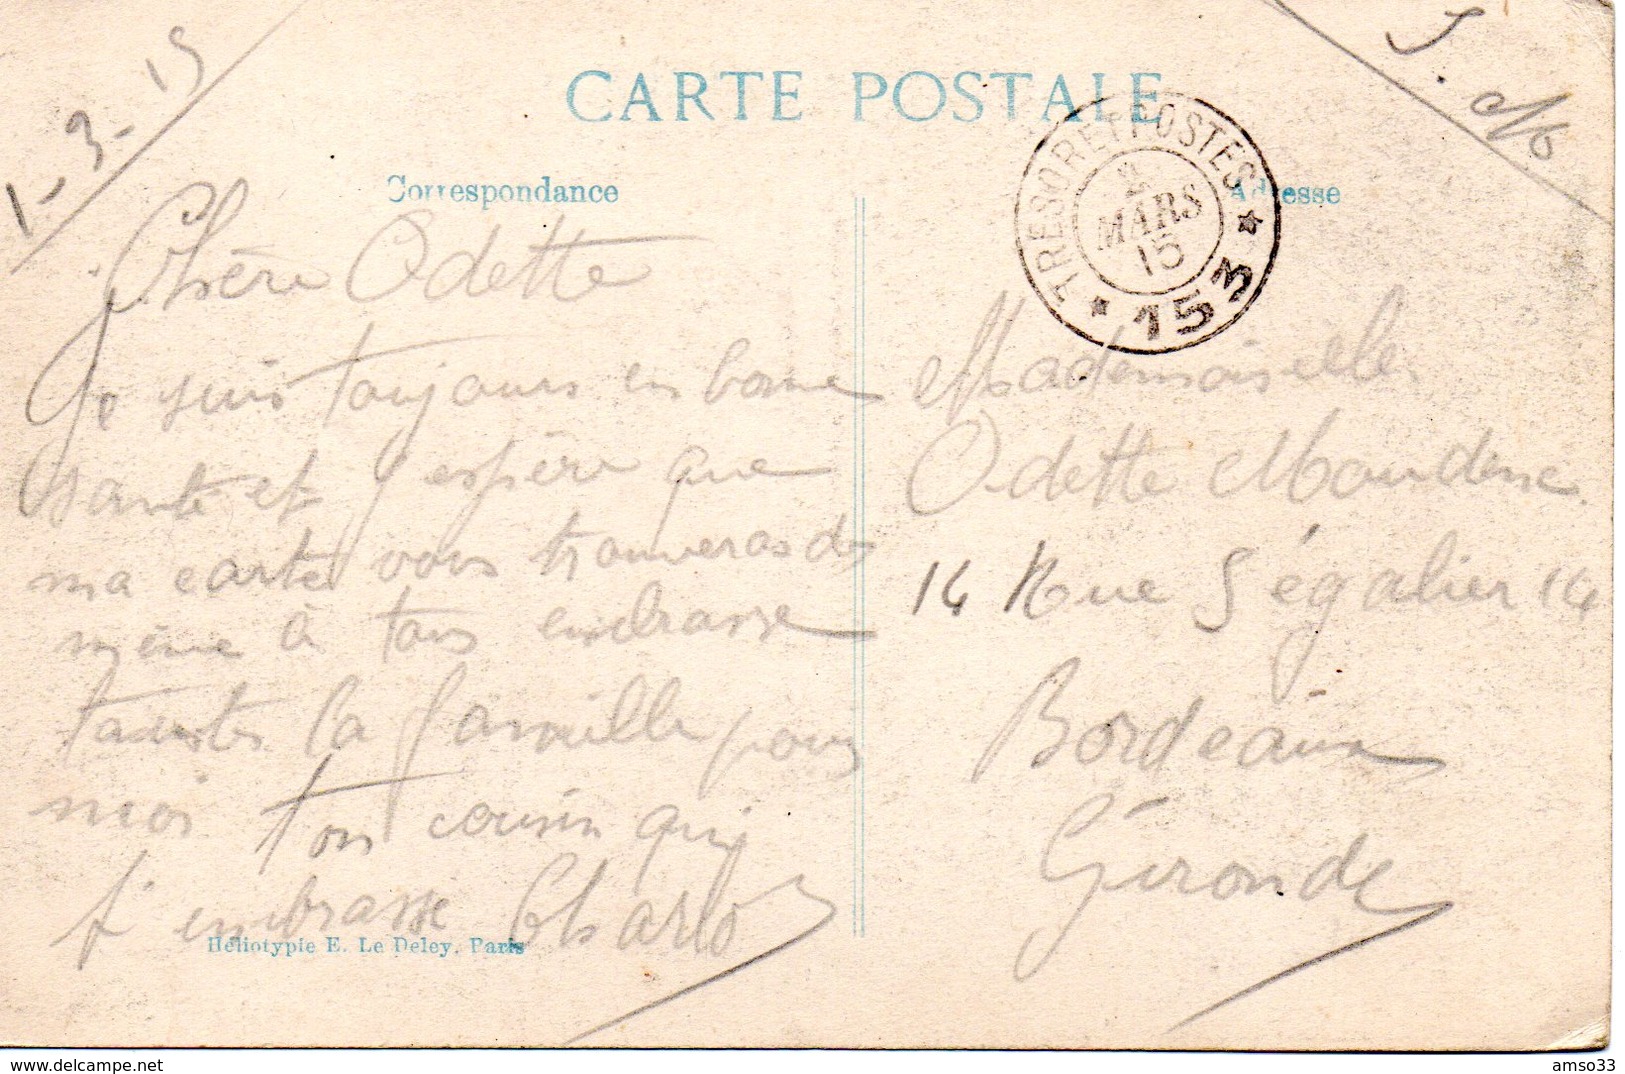 9715. CPA CONSTANTINOPLE. L'AMBASSADE DE FRANCE 1915 - Turquie